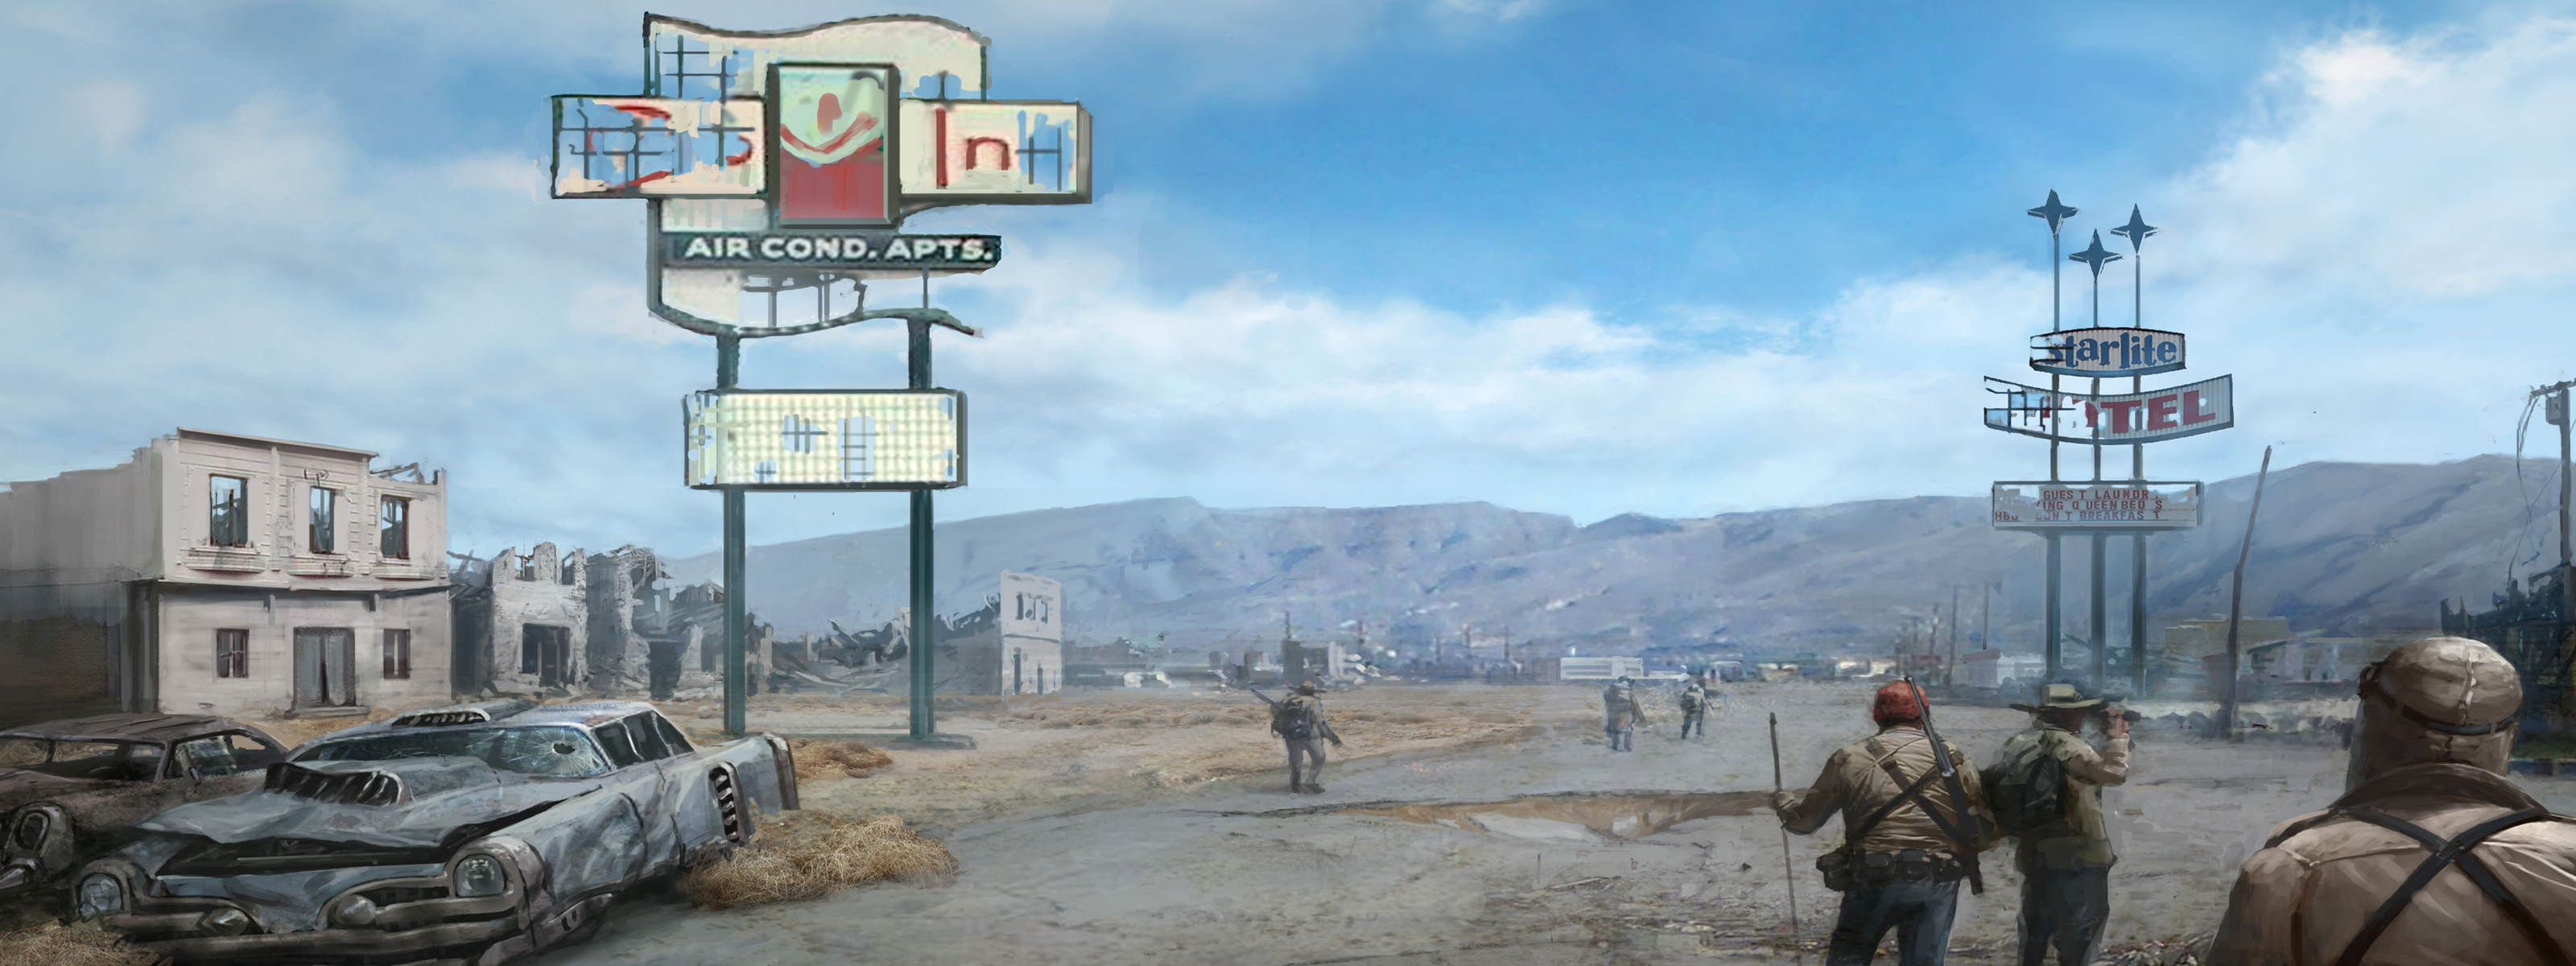 Fallout Dual Monitor Wallpaper